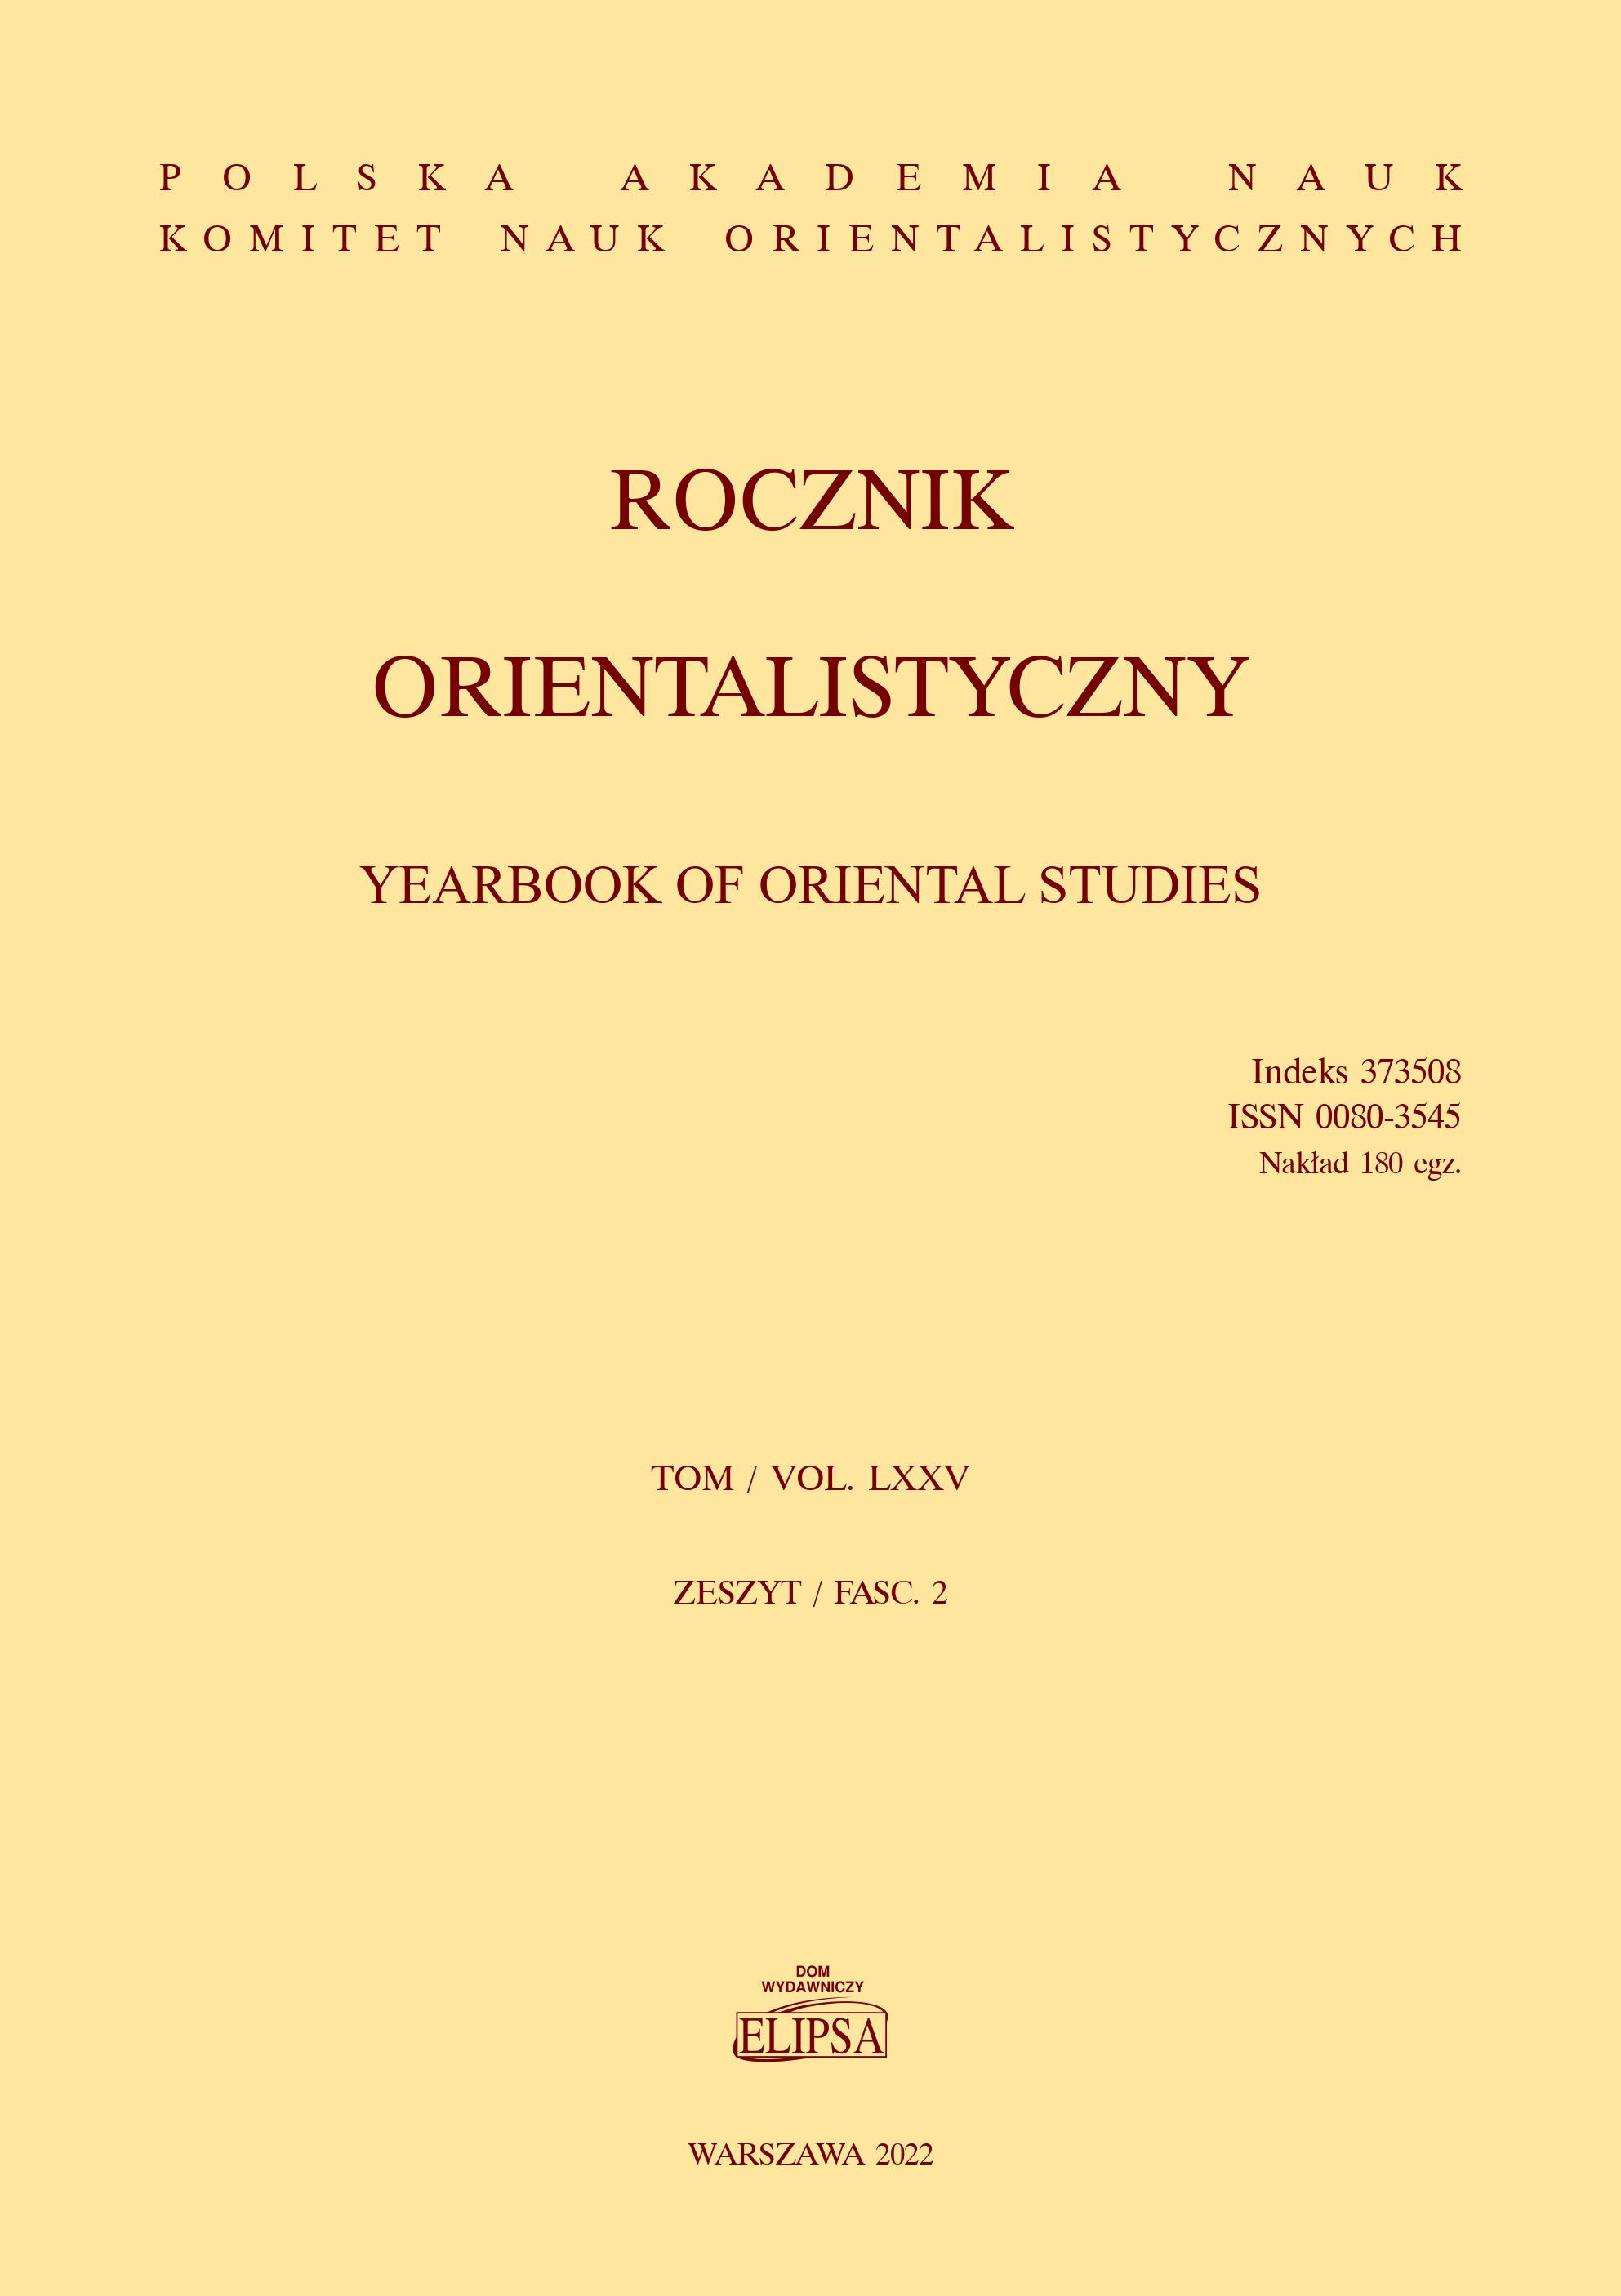 Jan Grzegorzewski – Visionary Orientalist or „Dreamer and Dilettante”? Cover Image